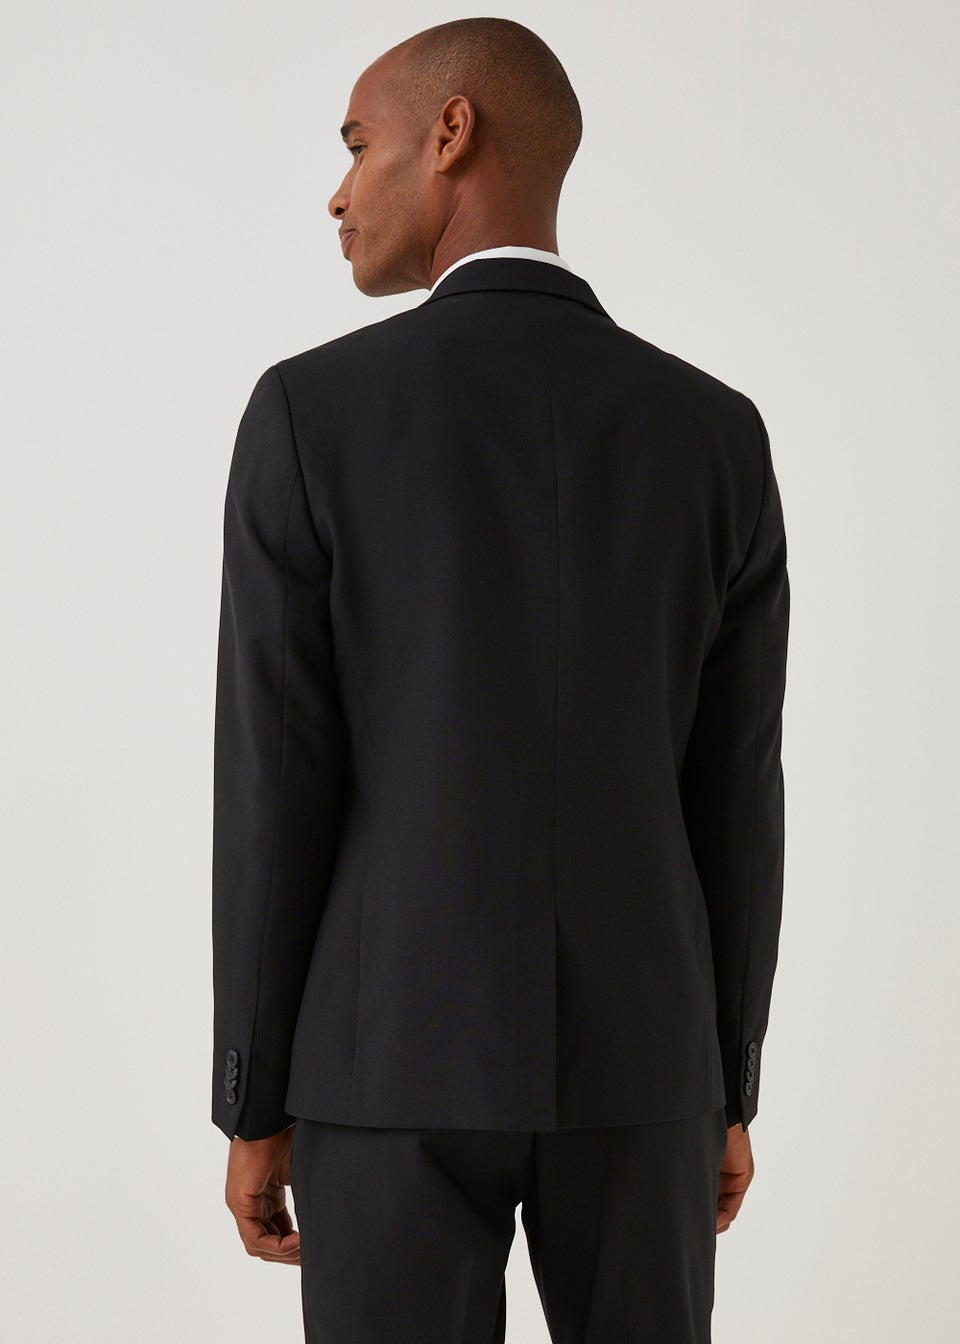 Taylor & Wright Panama Black Skinny Fit Suit Jacket